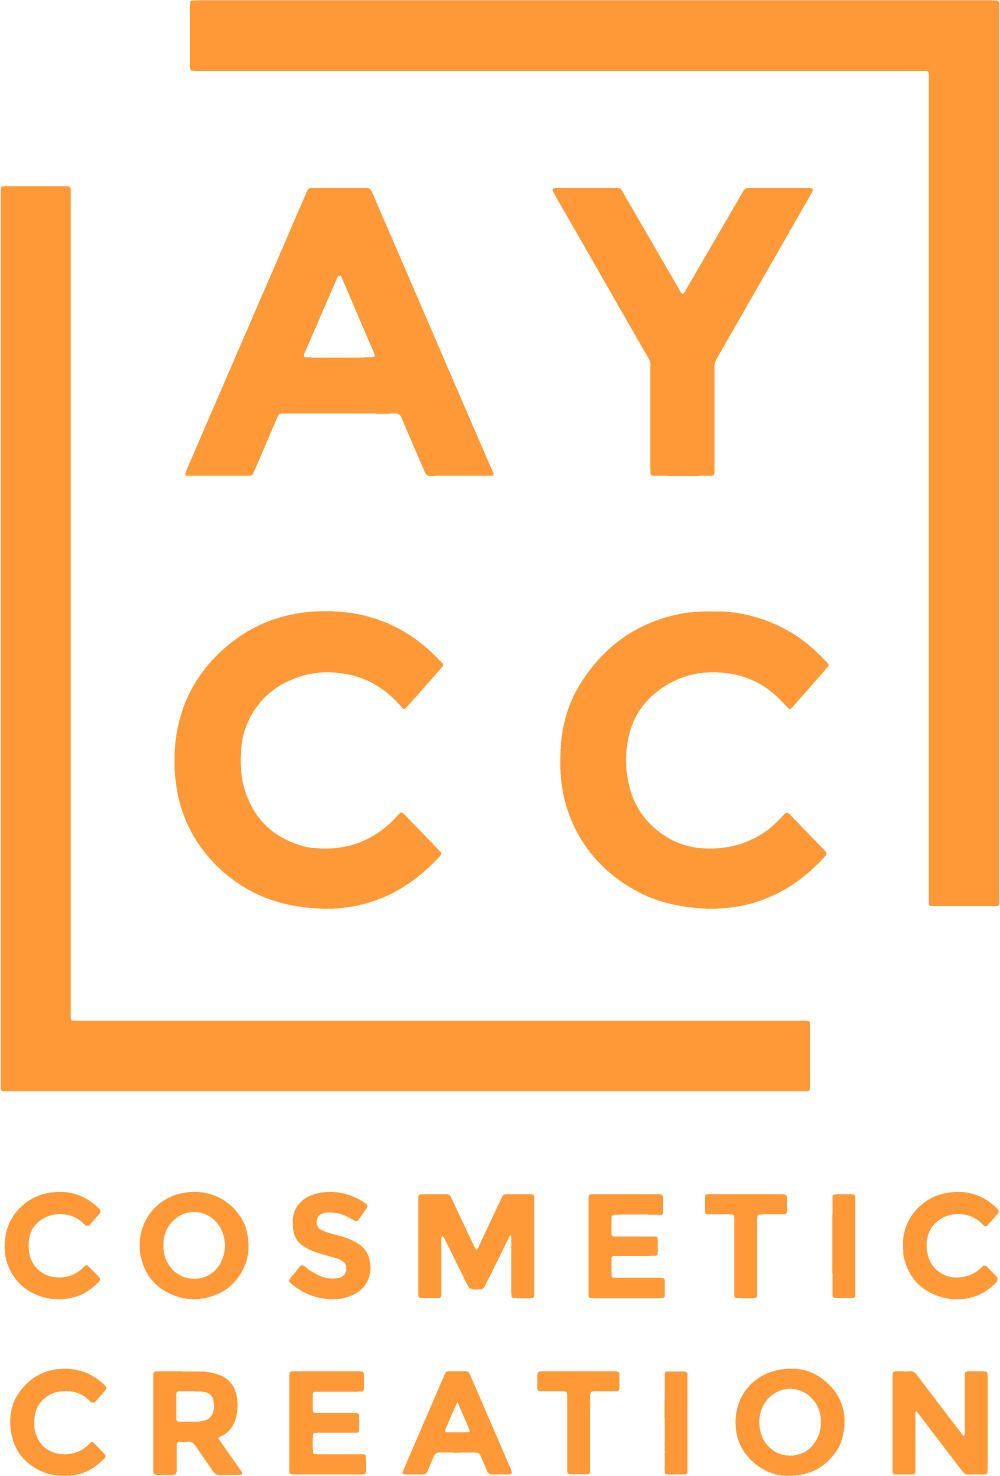 Logo AYCC - COSMETIC CREATION